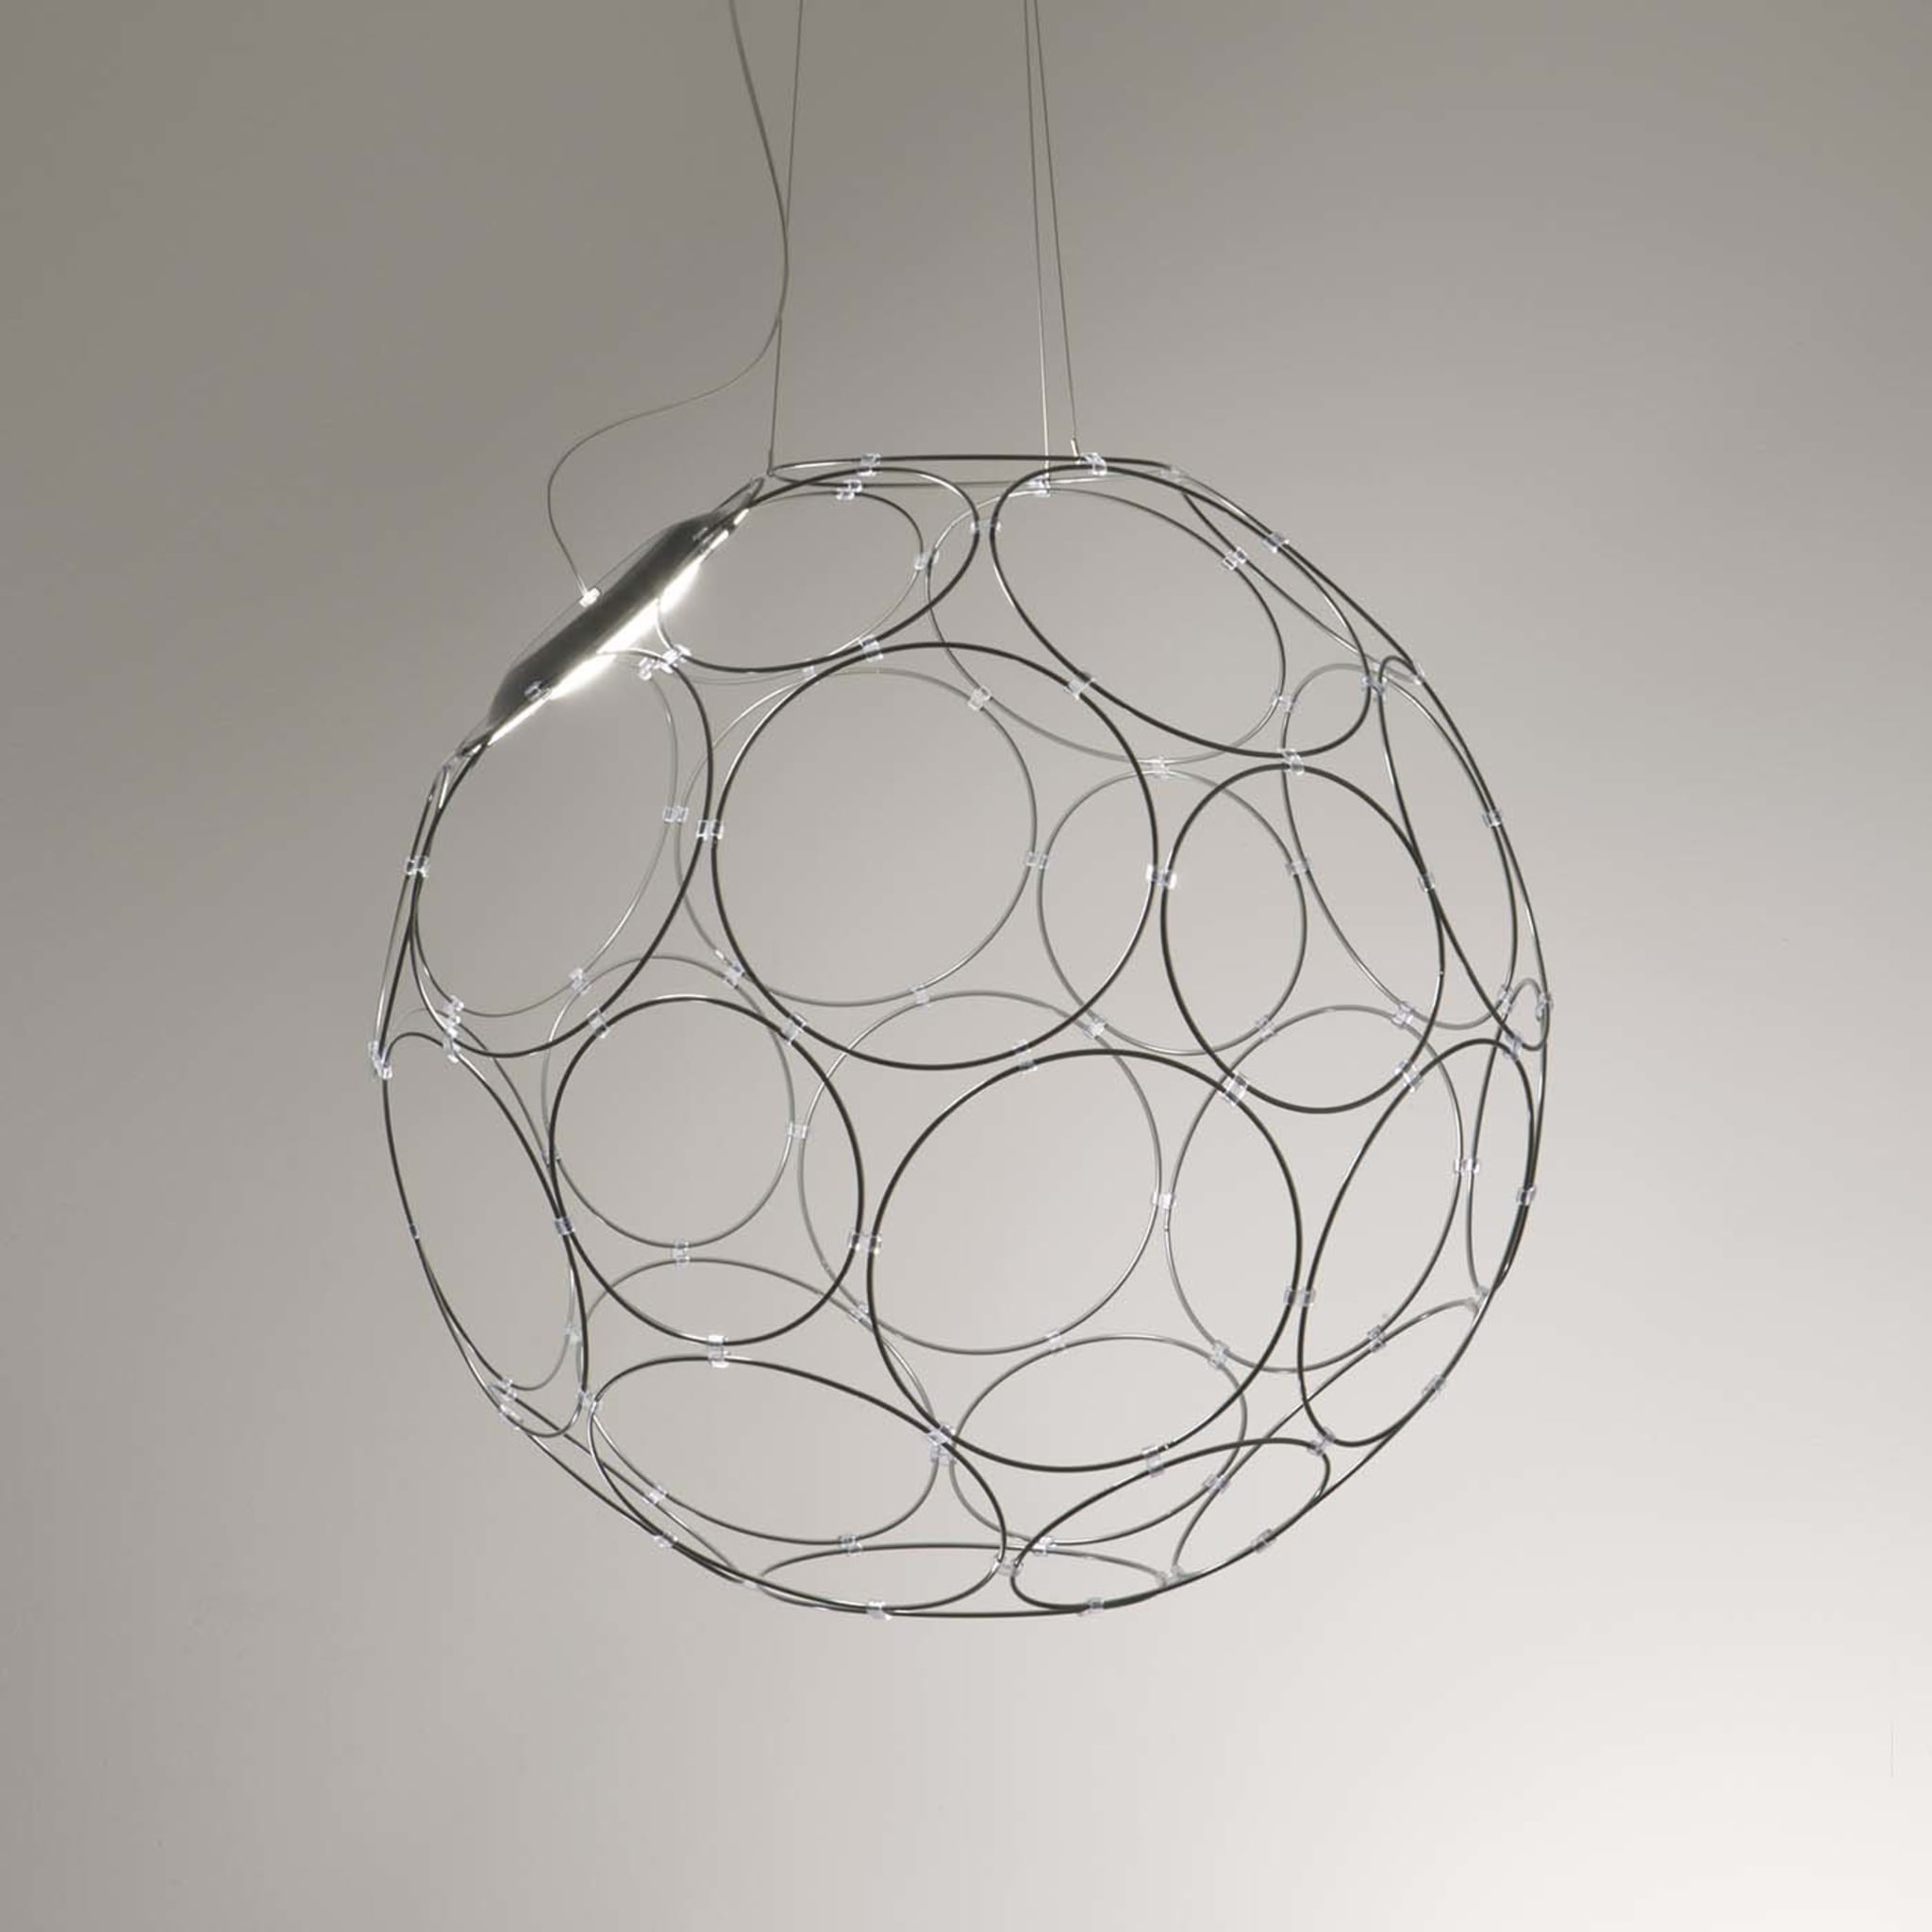 Giro Antracite Pendant Lamp by Formfjord Studio - Alternative view 1